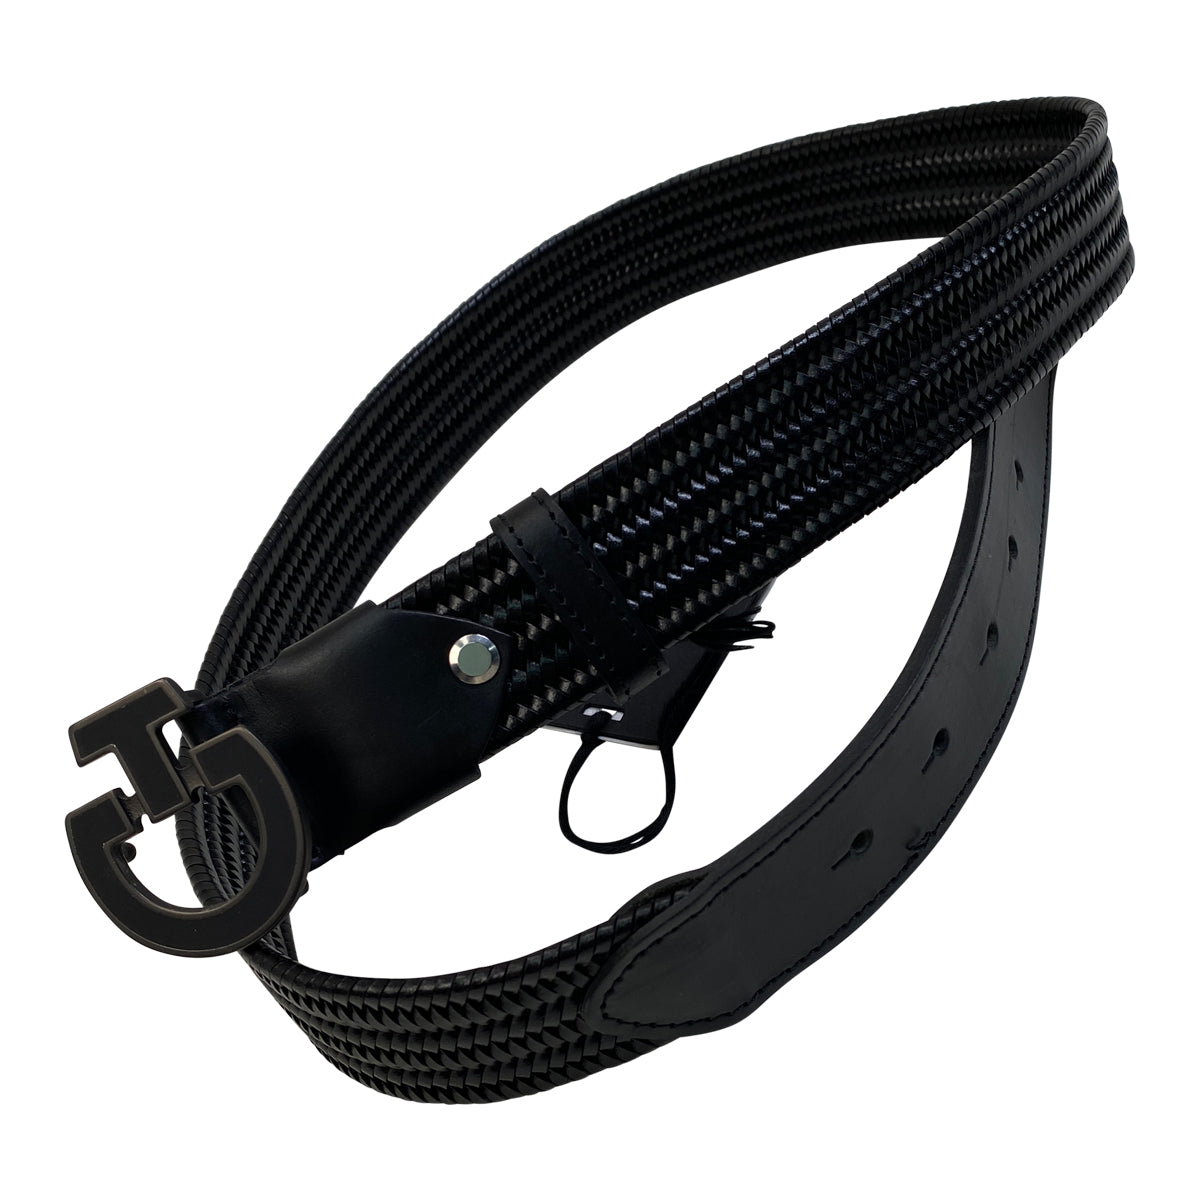 Cavalleria Toscana Elastic Woven Leather Belt in Black